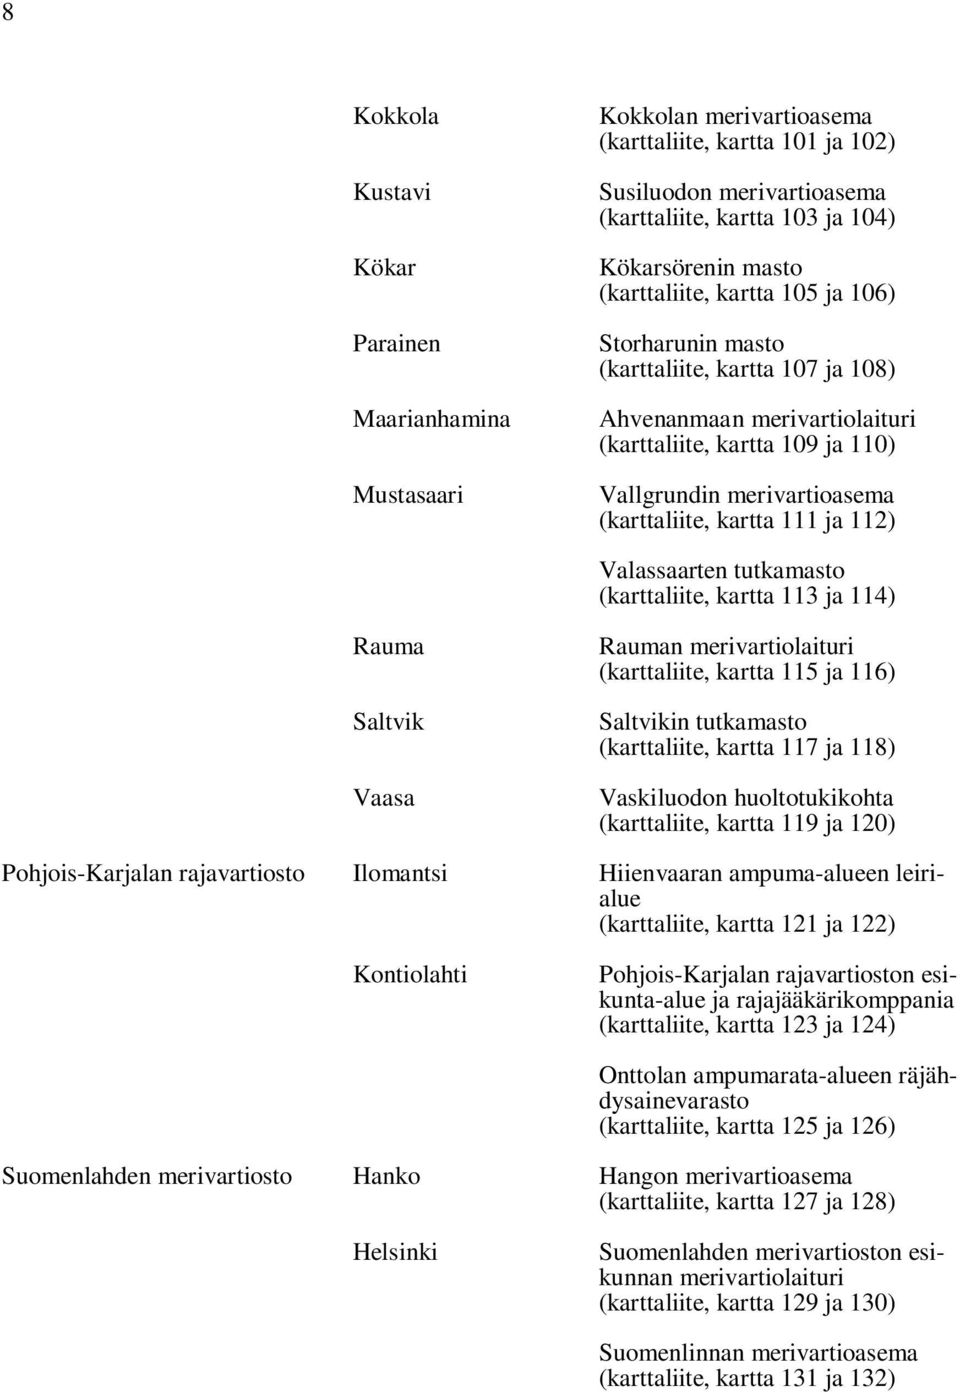 ja 112) Valassaarten tutkamasto (karttaliite, kartta 113 ja 114) Rauma Saltvik Vaasa Rauman merivartiolaituri (karttaliite, kartta 115 ja 116) Saltvikin tutkamasto (karttaliite, kartta 117 ja 118)